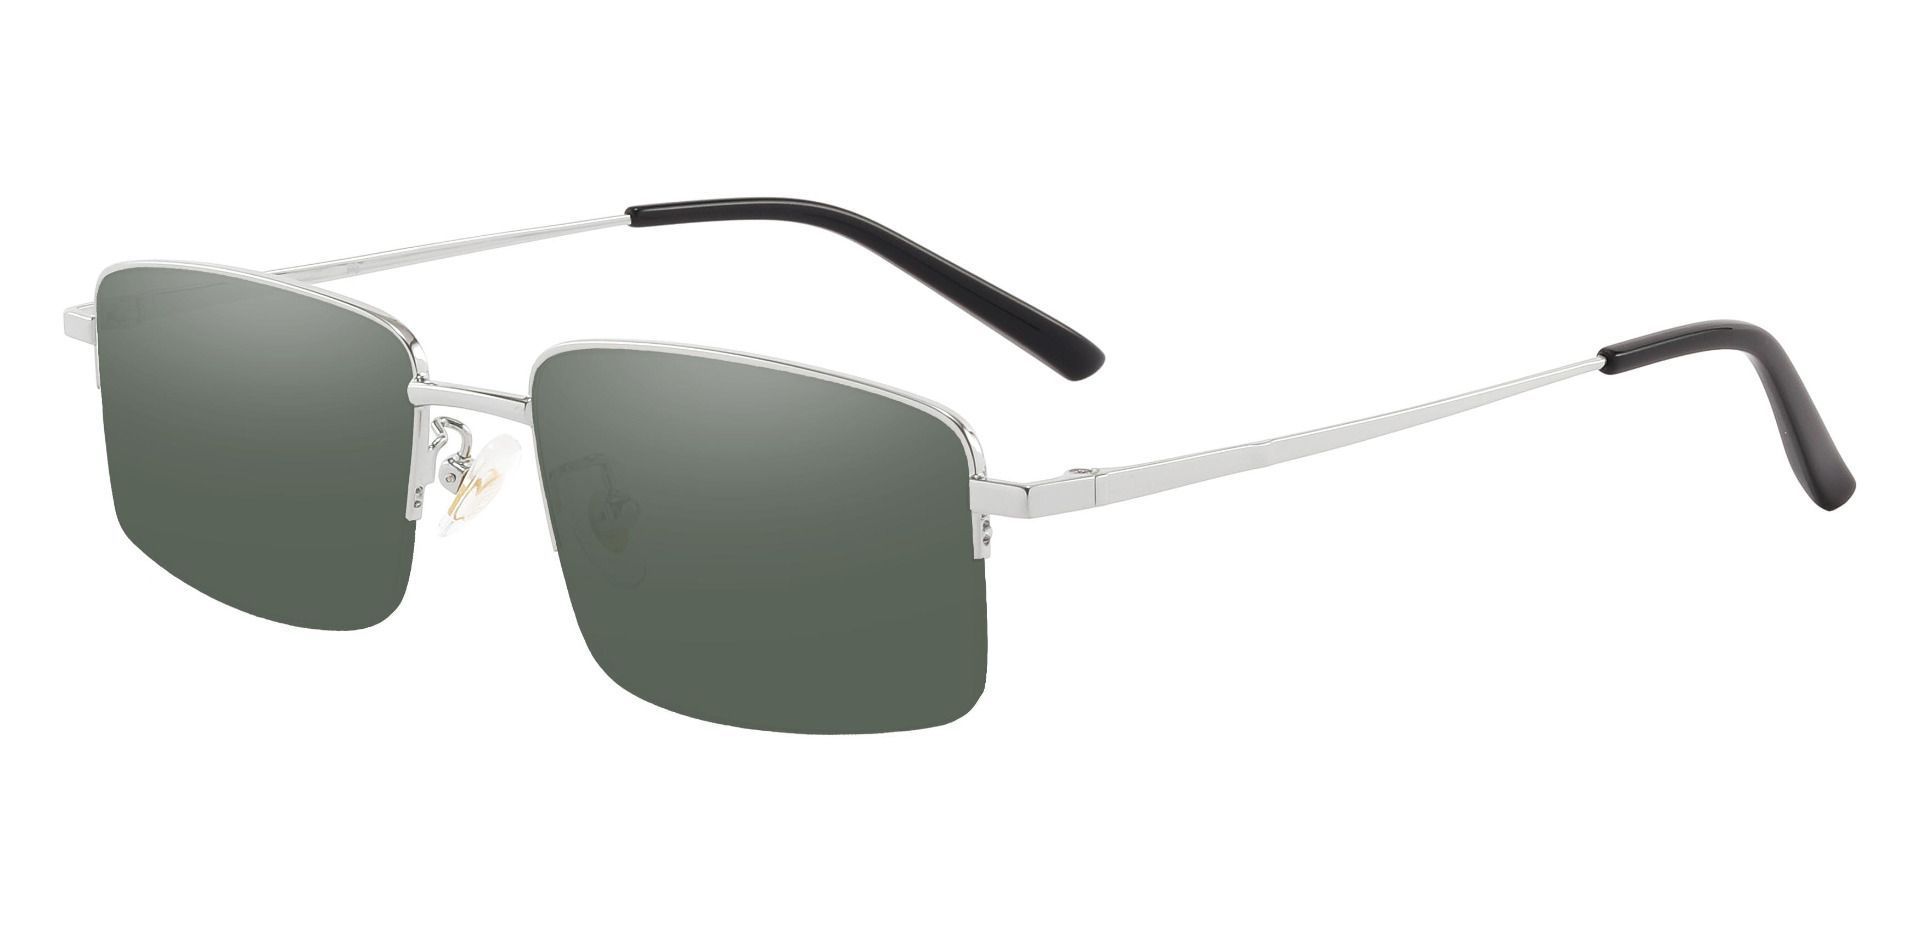 Wayne Rectangle Non-Rx Sunglasses - Silver Frame With Green Lenses